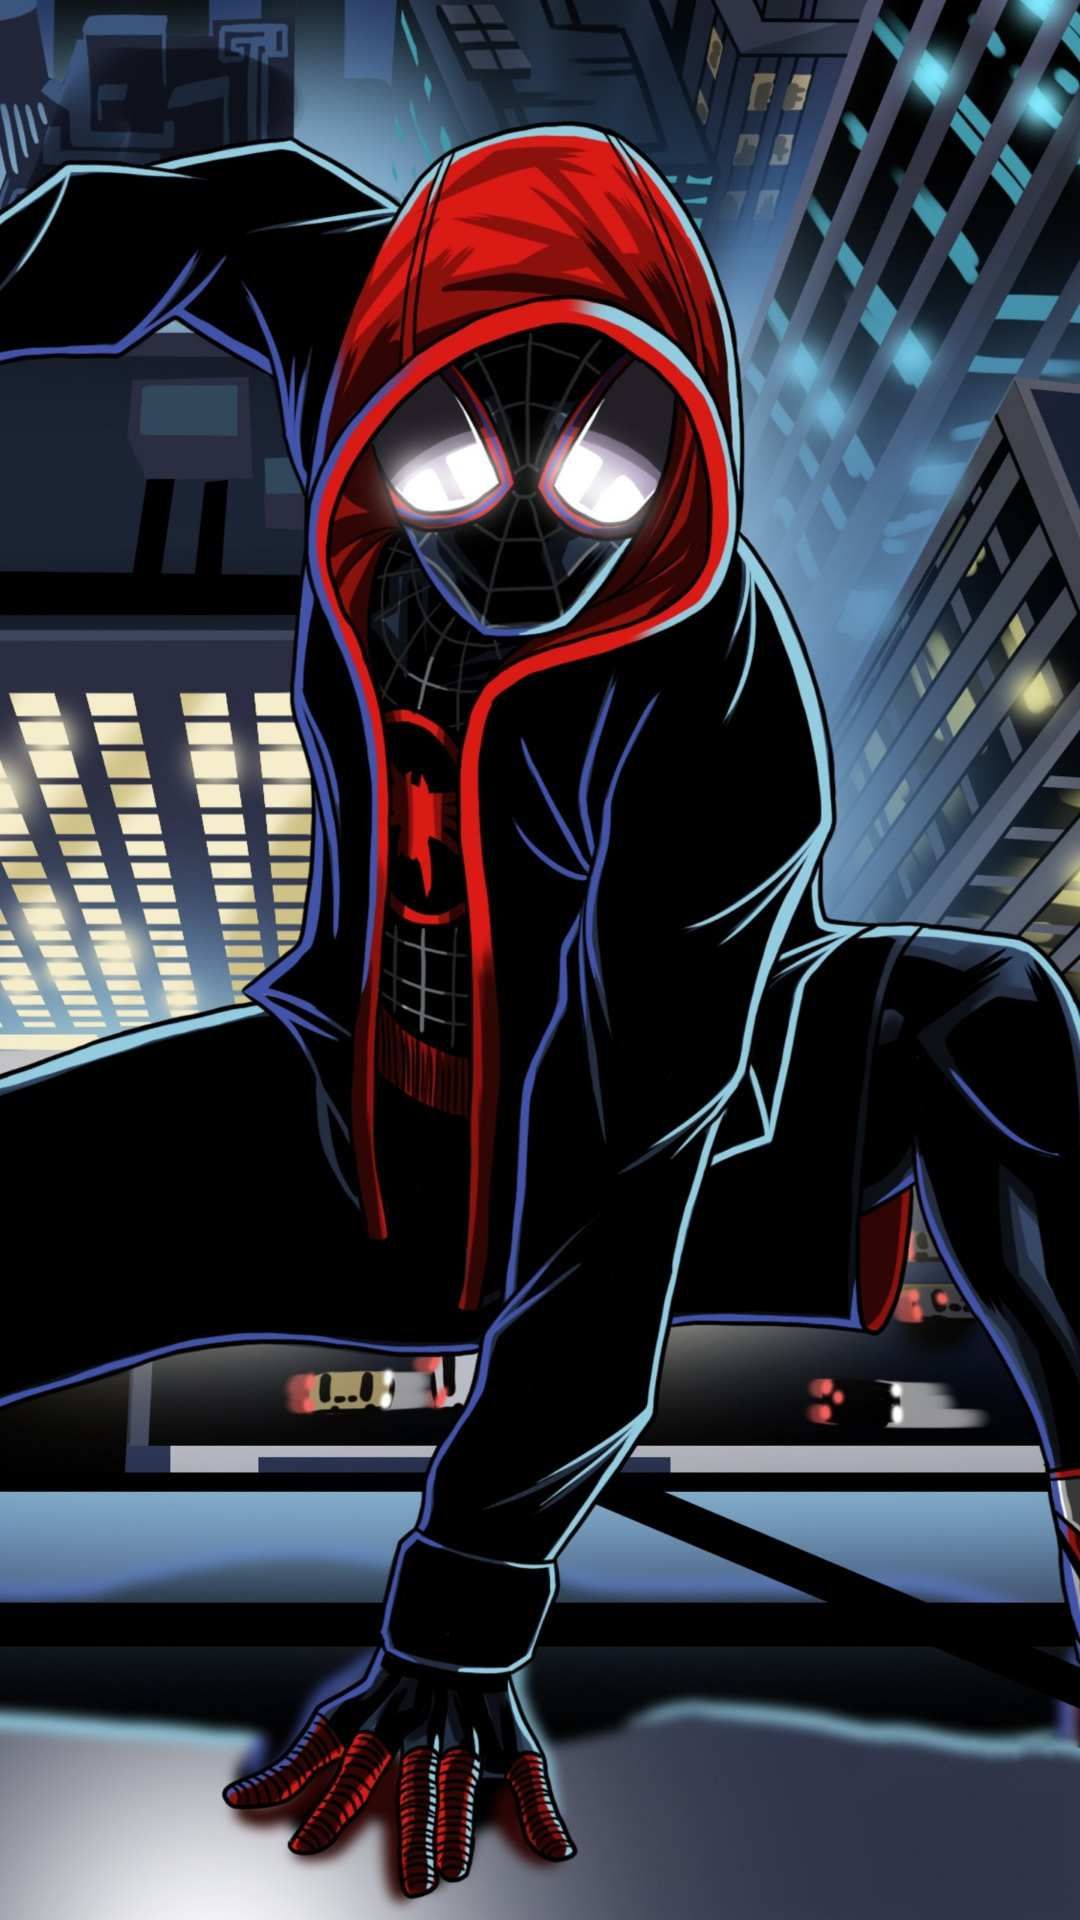 Black Spidey Wallpaper. Spiderman artwork, Marvel spiderman art, Superhero wallpaper